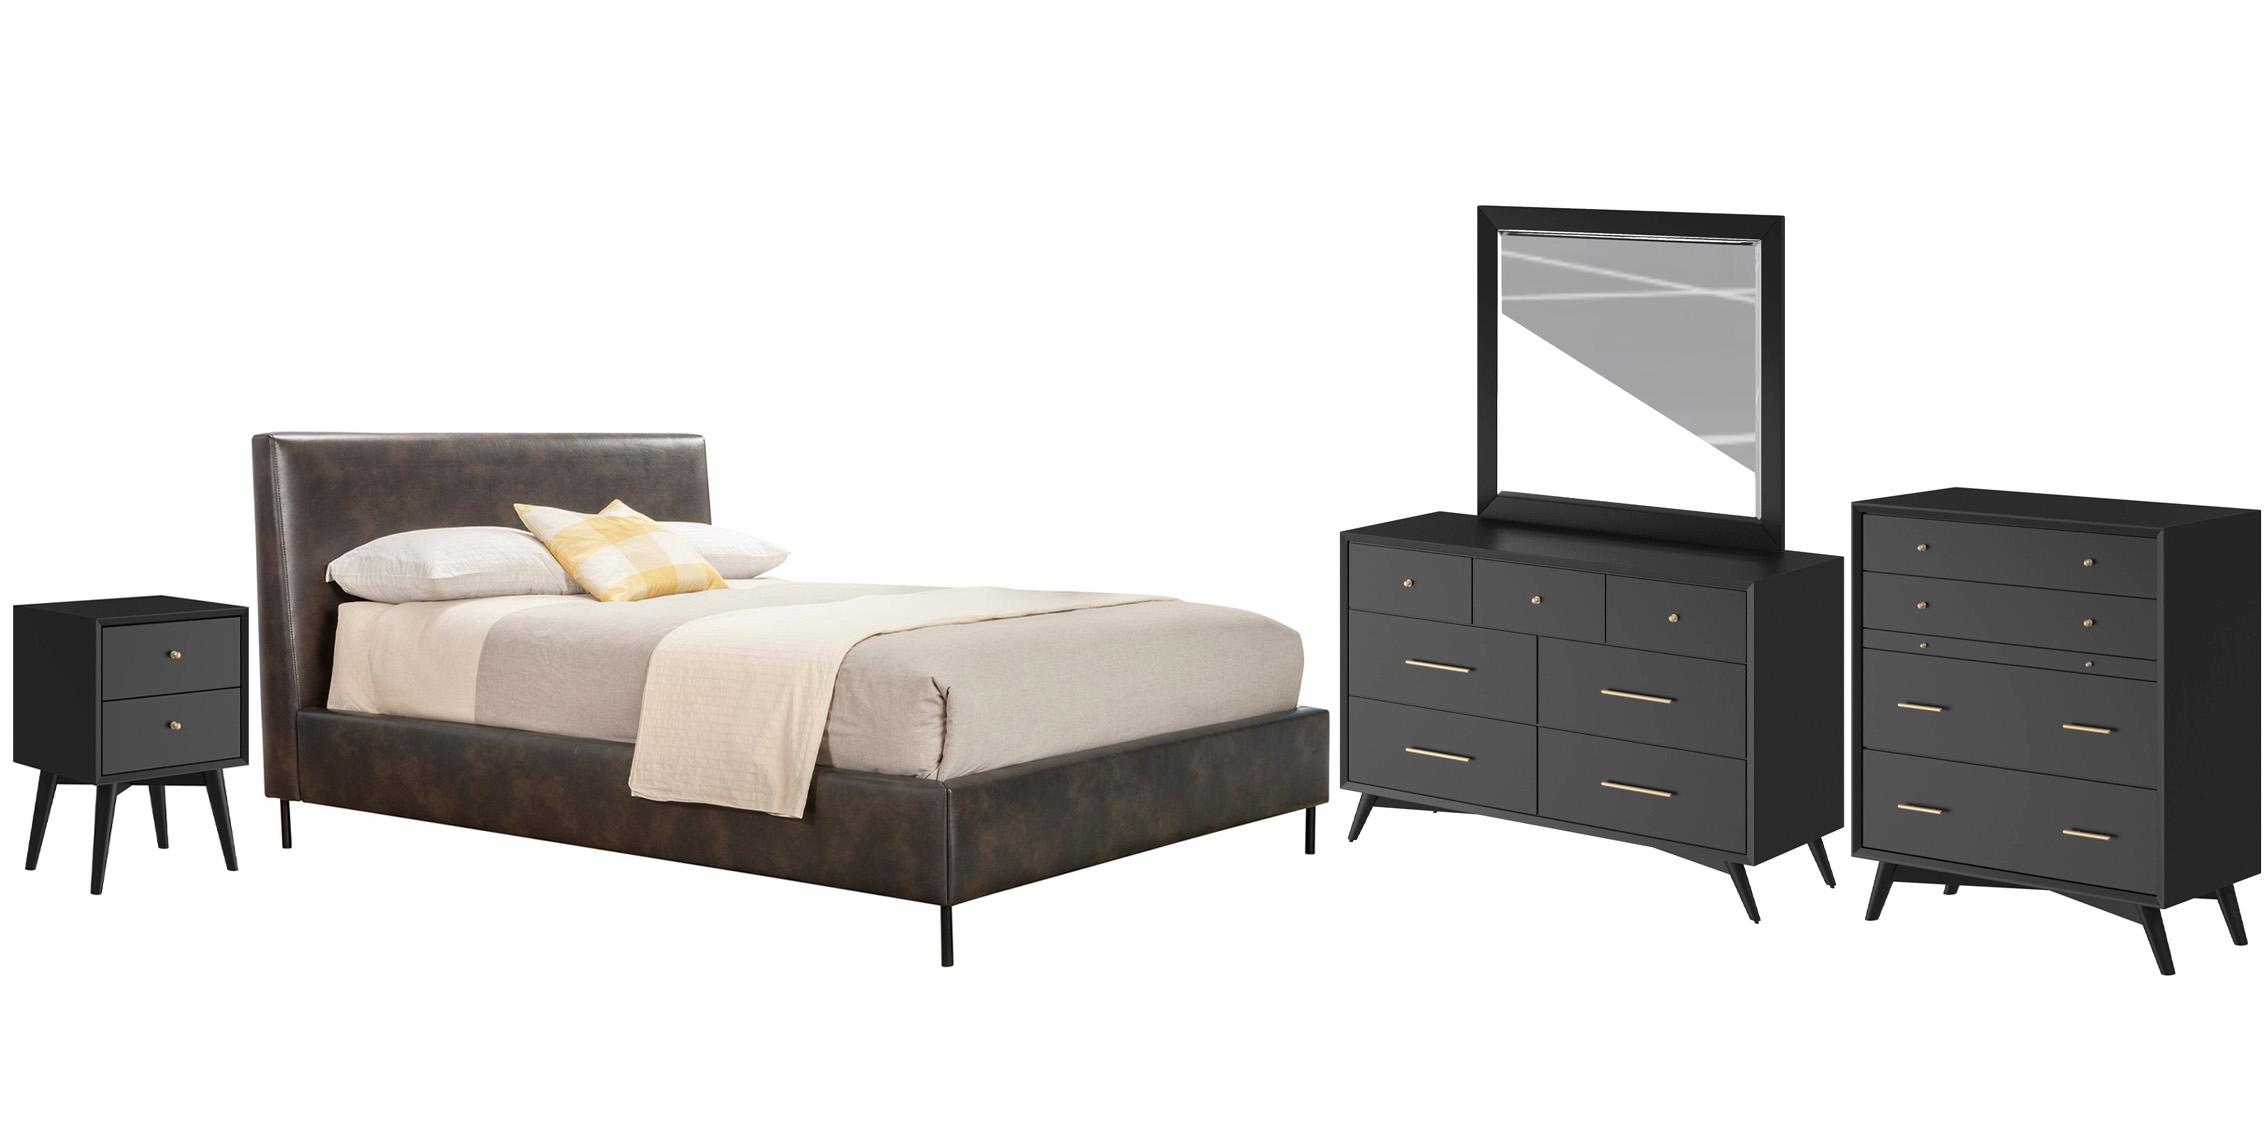 Modern Platform Bedroom Set SOPHIA / FLYNN 6902F-GRY-Set-5-BLK in Gray, Black Faux Leather